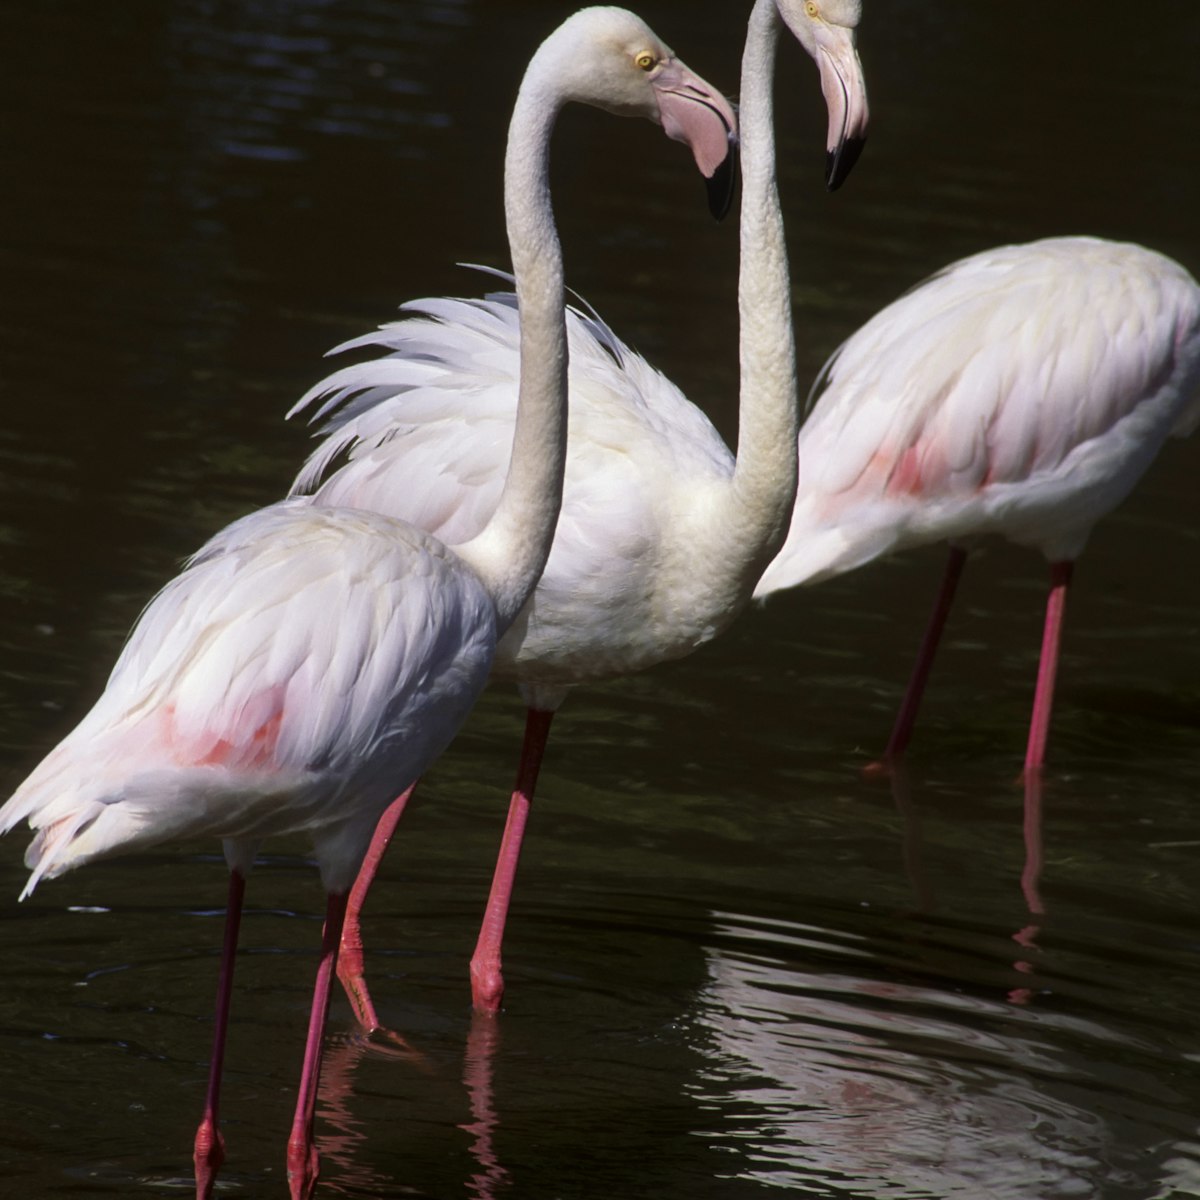 MAURITIUS - 1991/01/01: Mauritius, Casela Bird Park, Flamingos. (Photo by Wolfgang Kaehler/LightRocket via Getty Images)